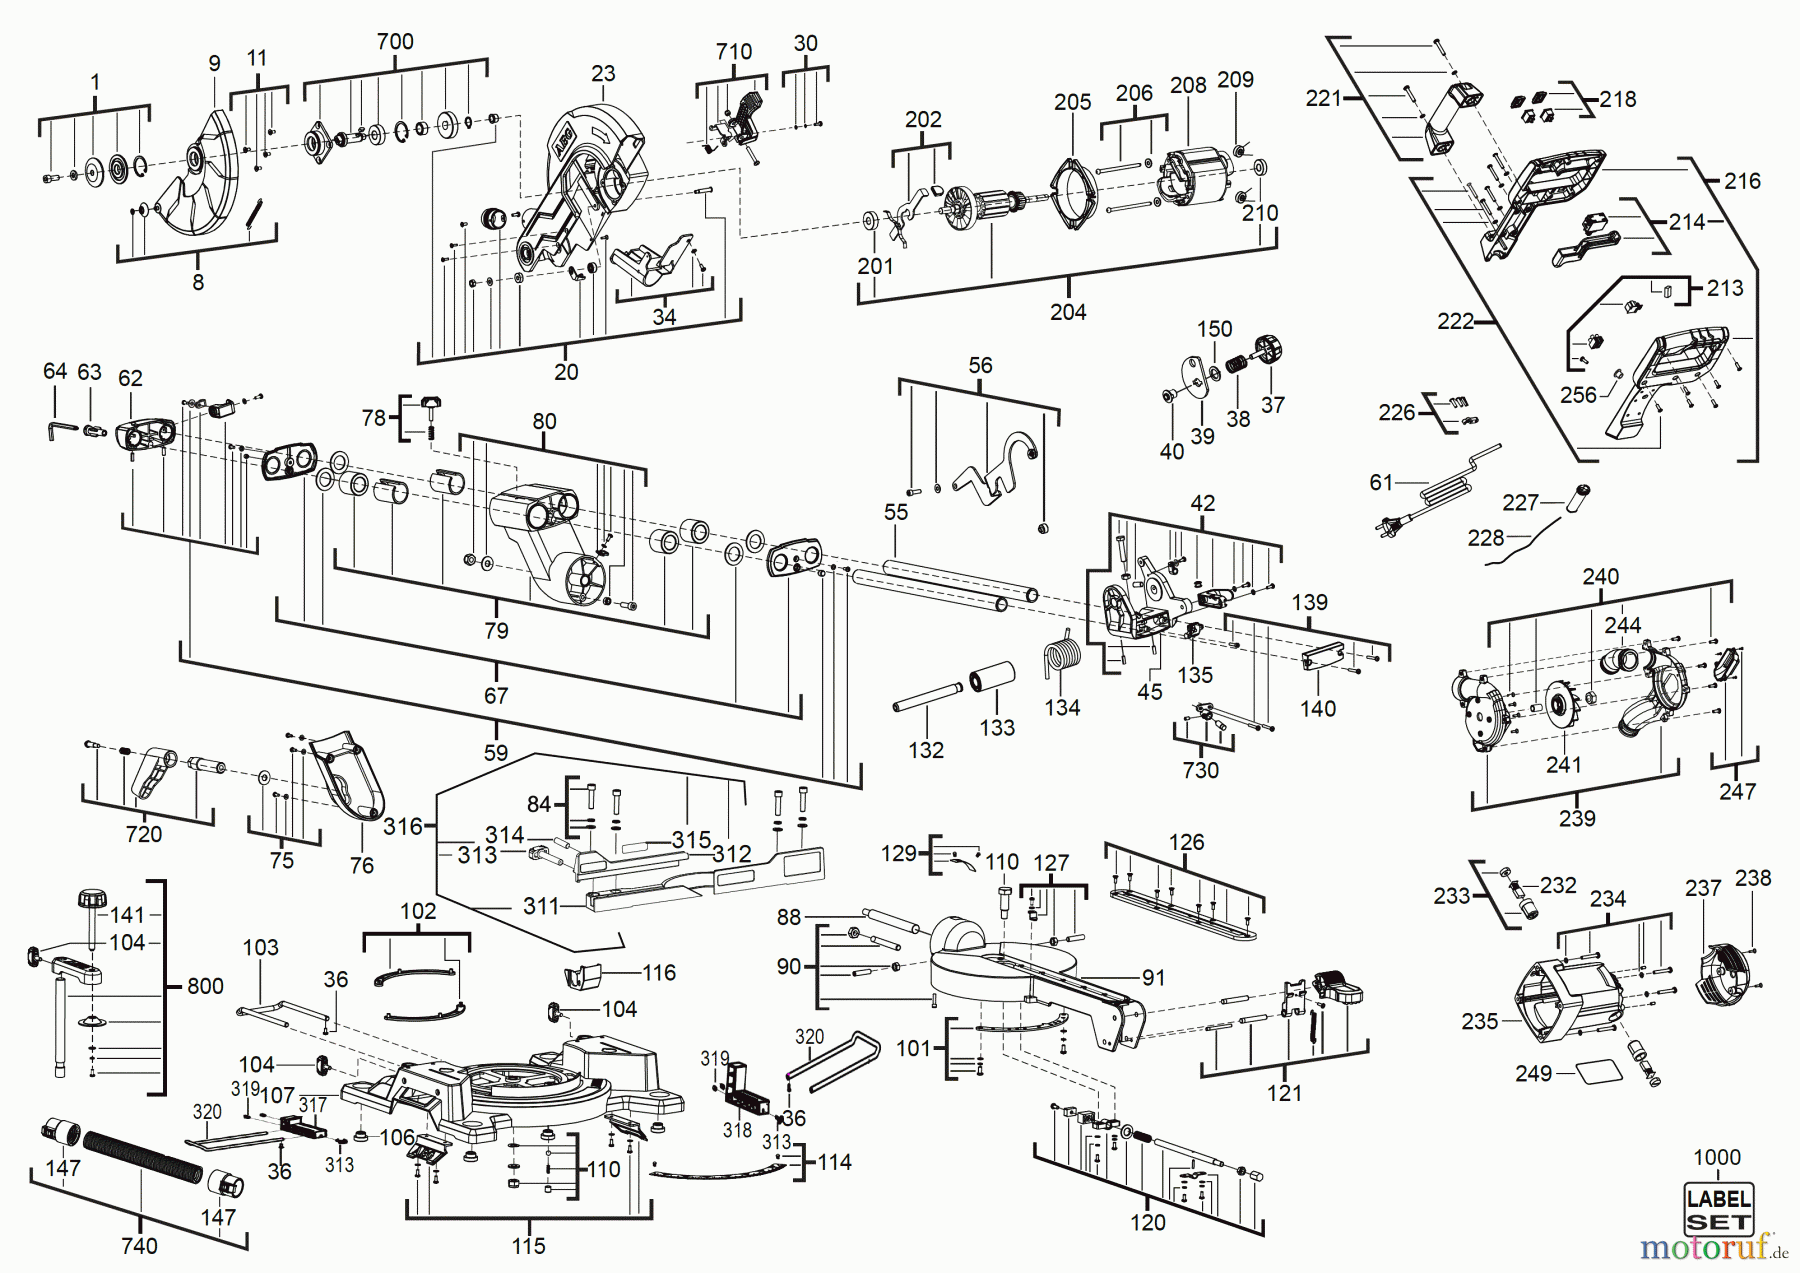  AEG Powertools Holz-Bearbeitung Kapp- und Gehrungssäge PS 216 L Kapp- und Gehrungssäge mit Zugfunktion Seite 1